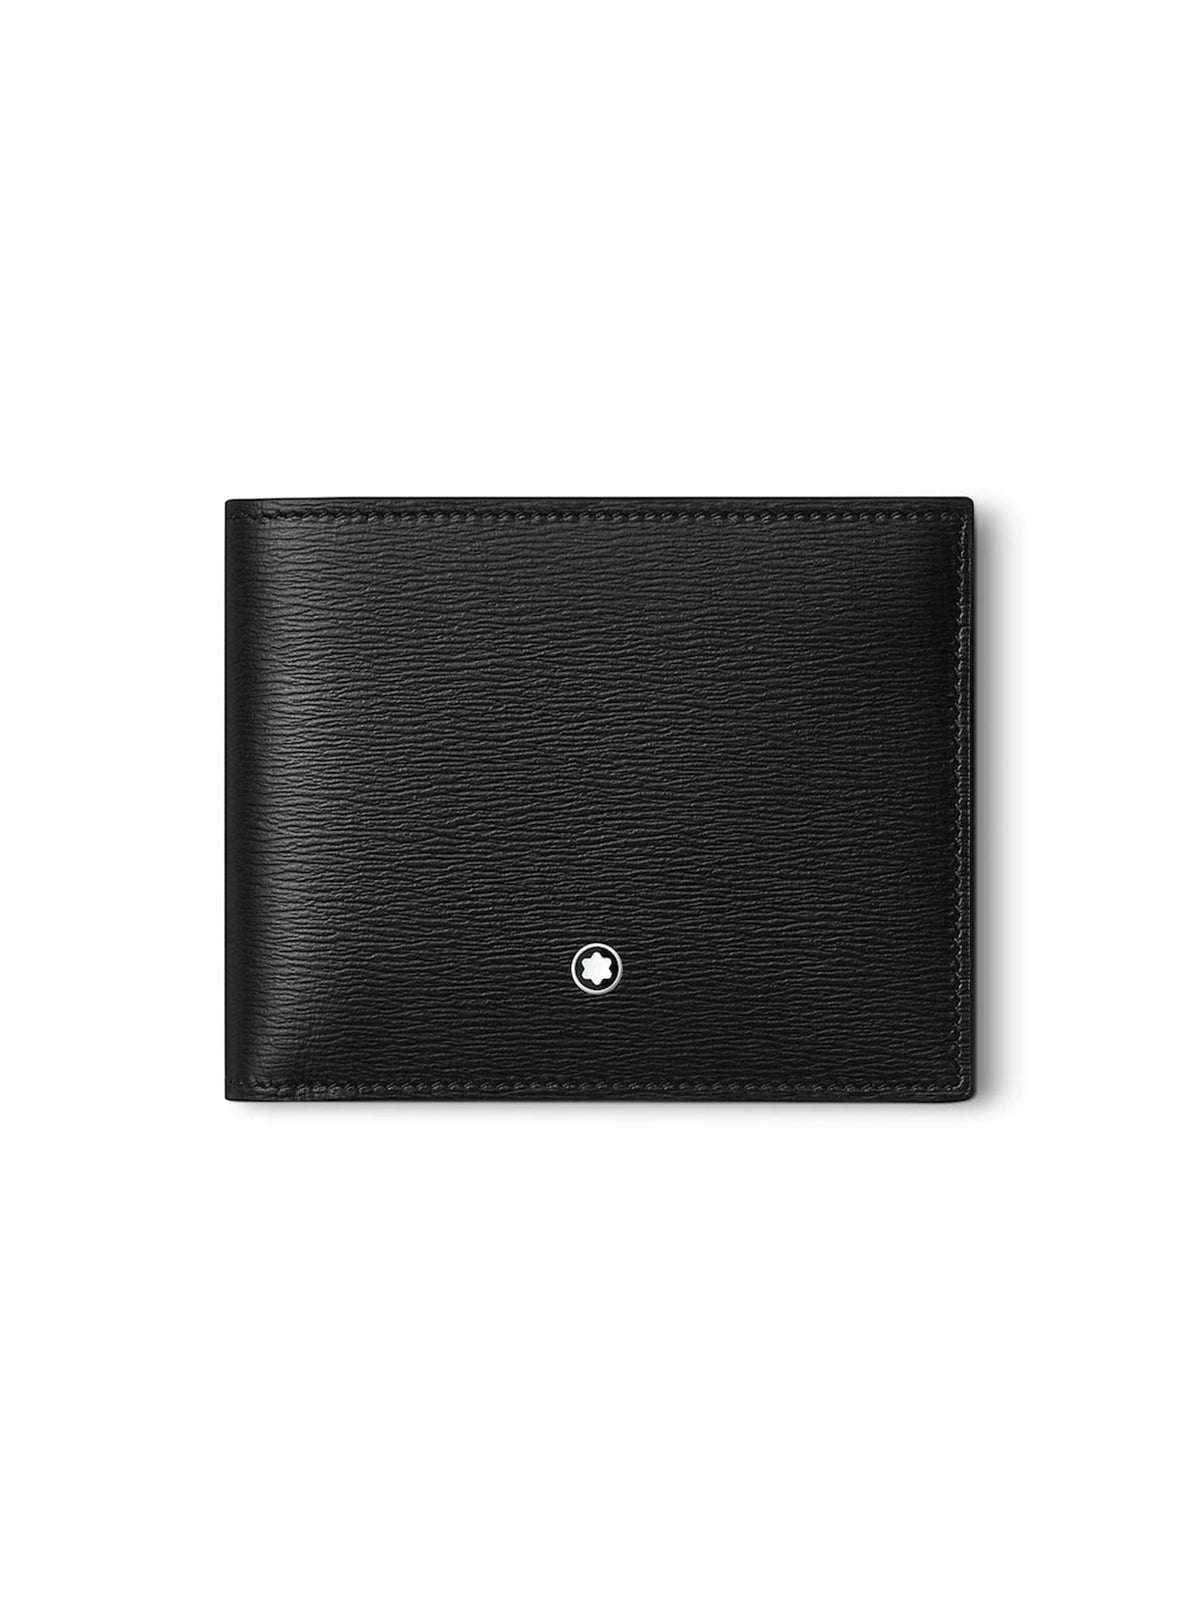 Montblanc Meisterstuck Black Leather Wallet MB129242